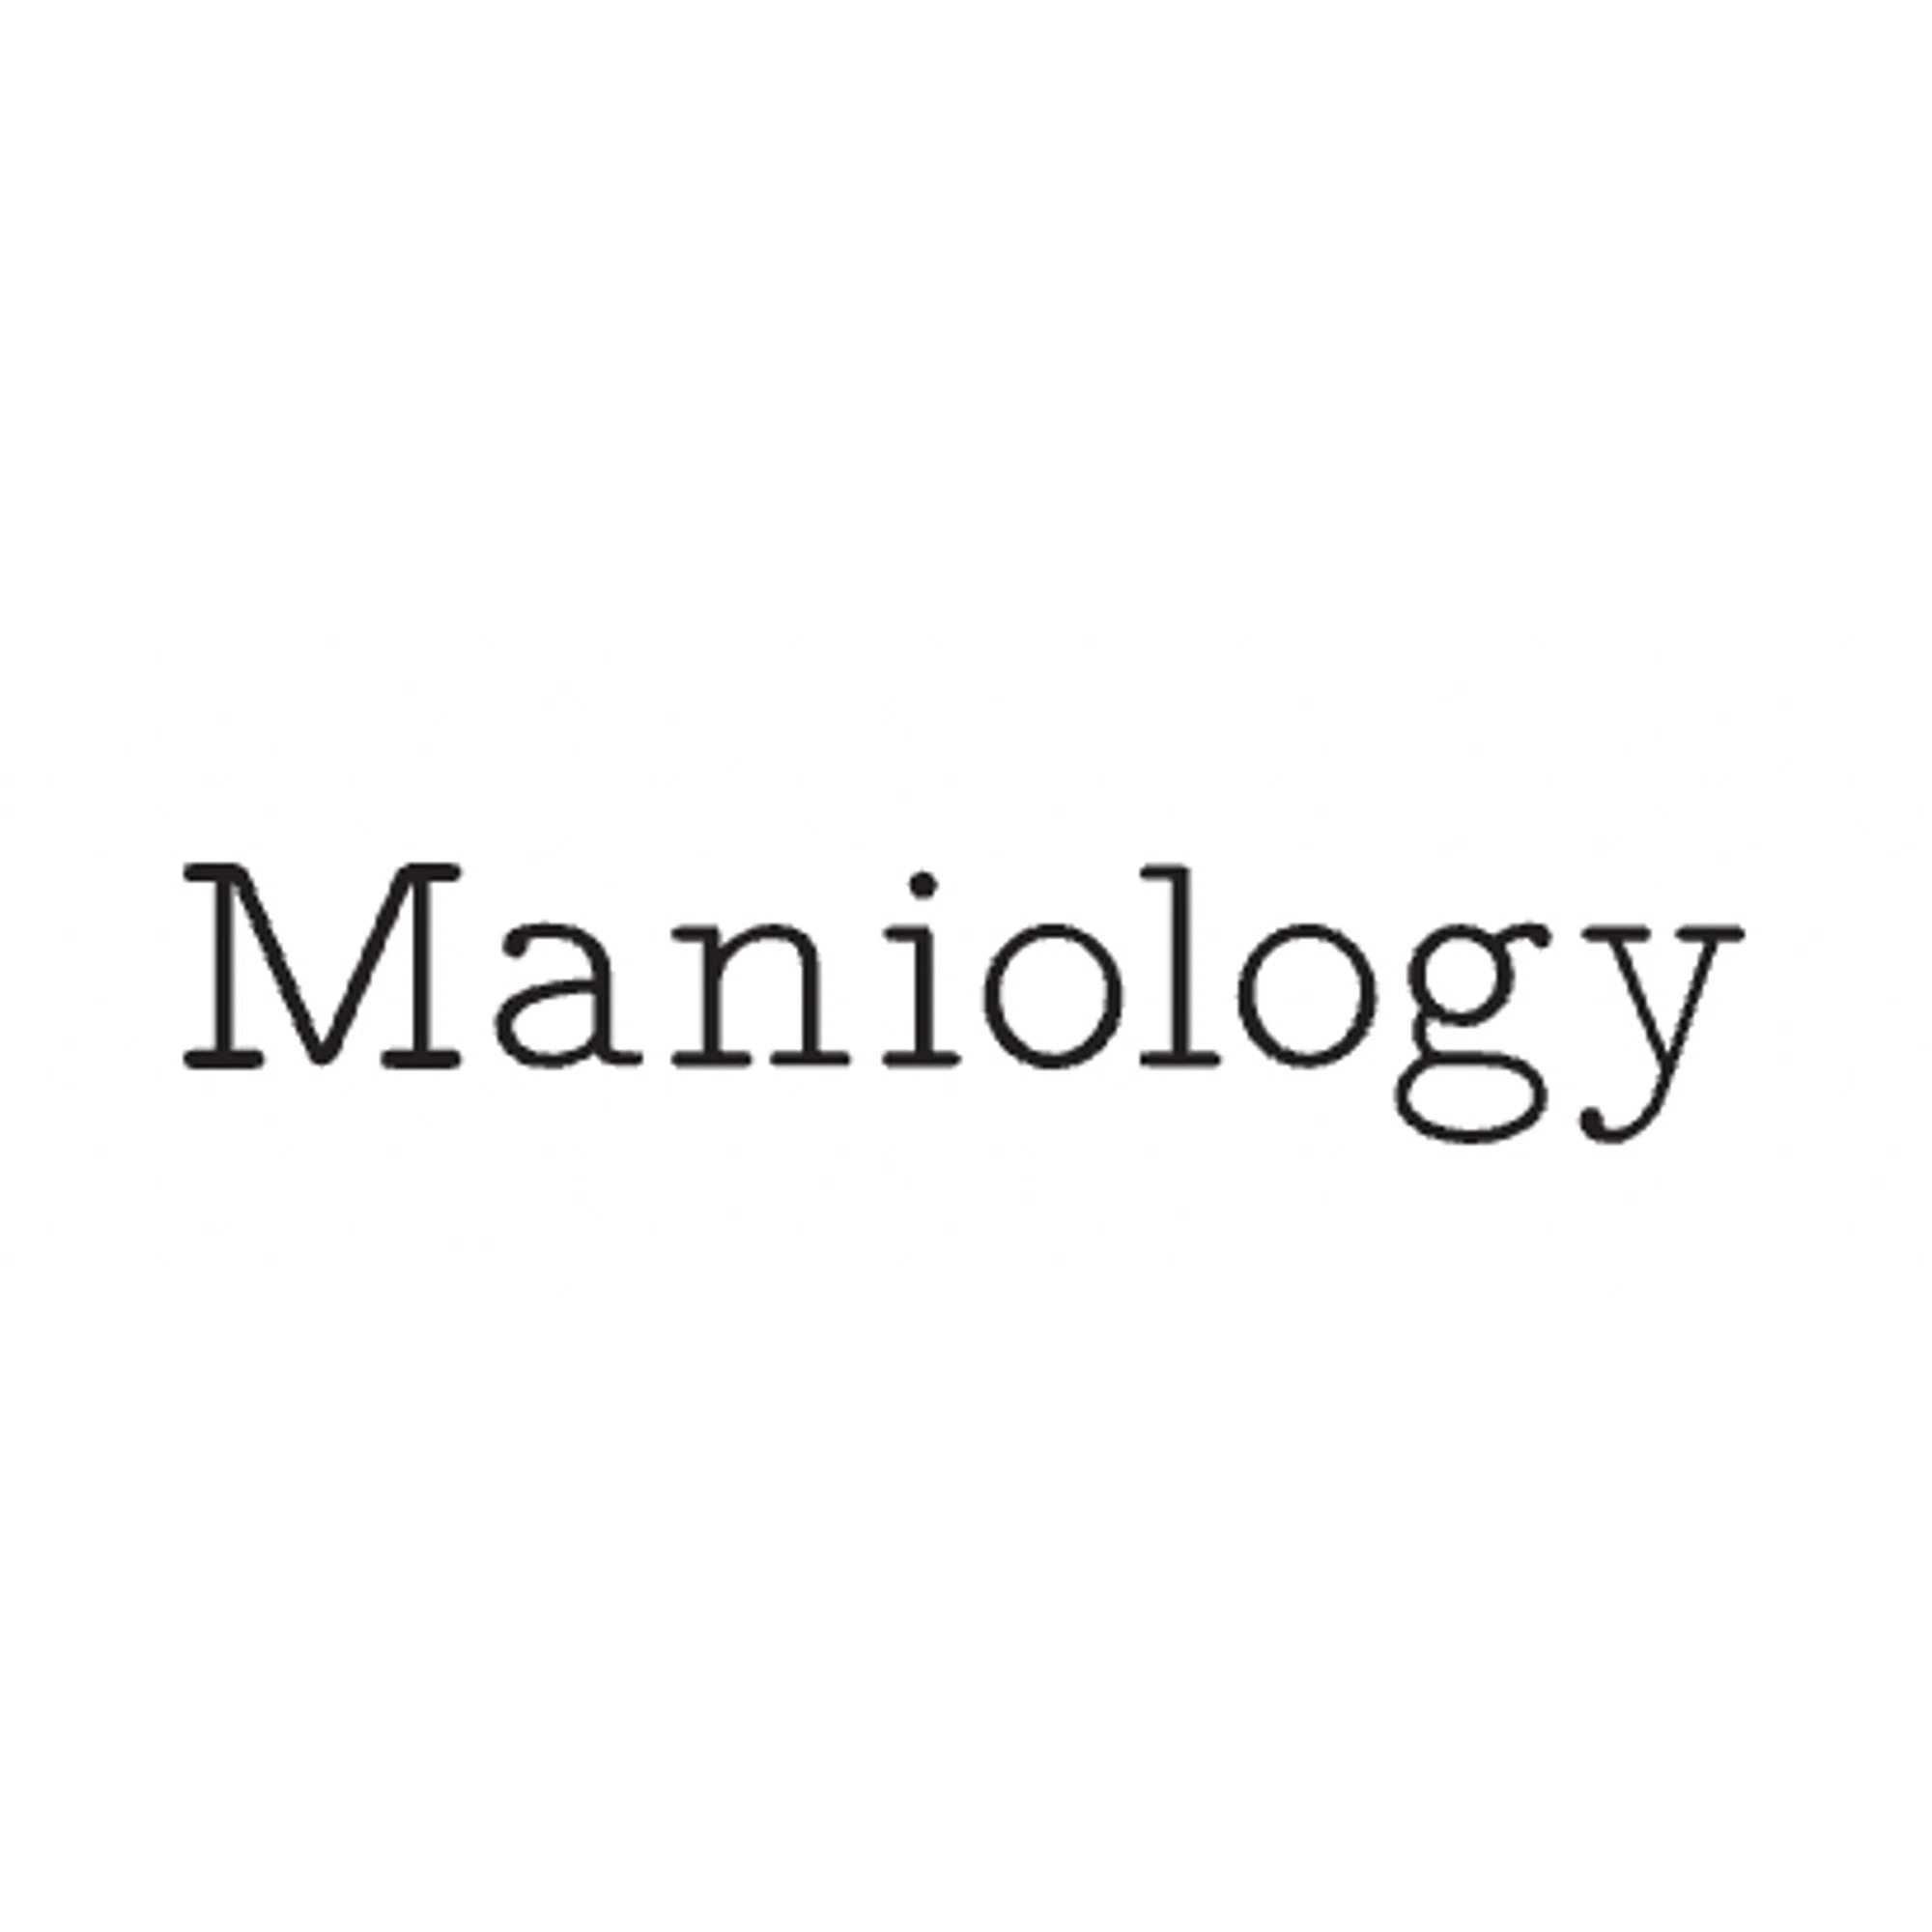 Maniology